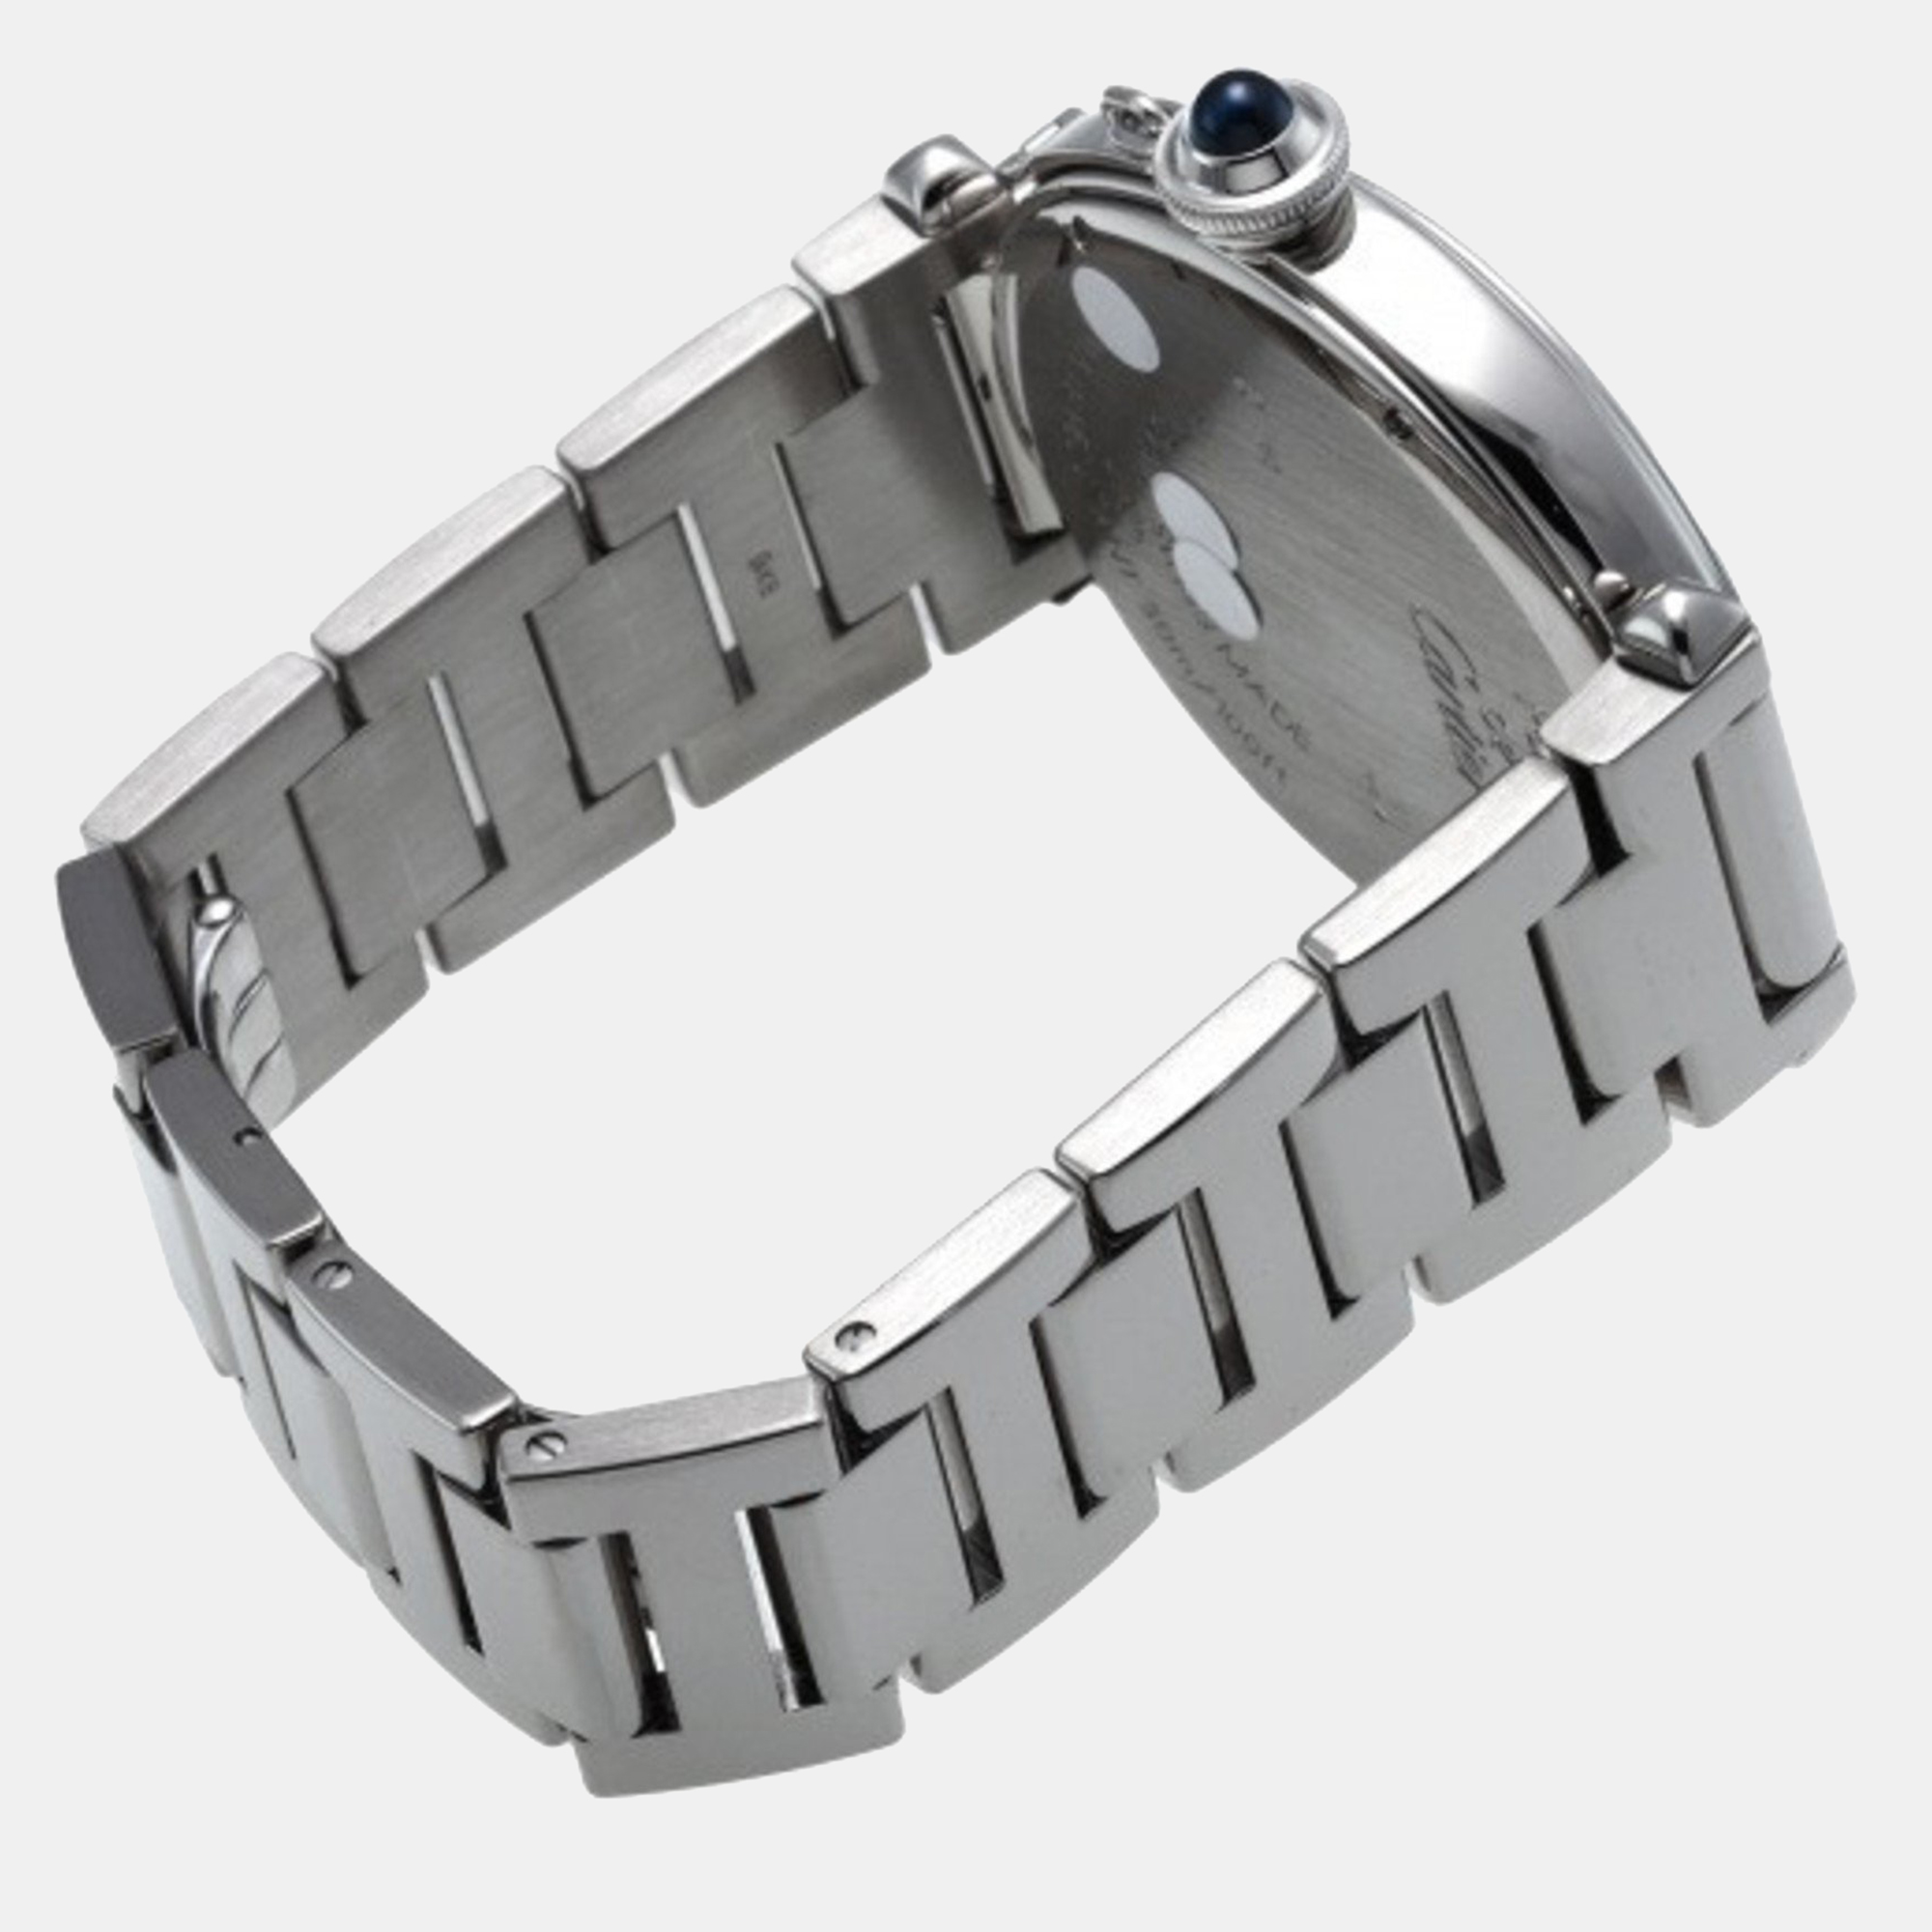 Cartier Silver 18k White Gold Pasha W30187M9 Automatic Men's Wristwatch 42 Mm